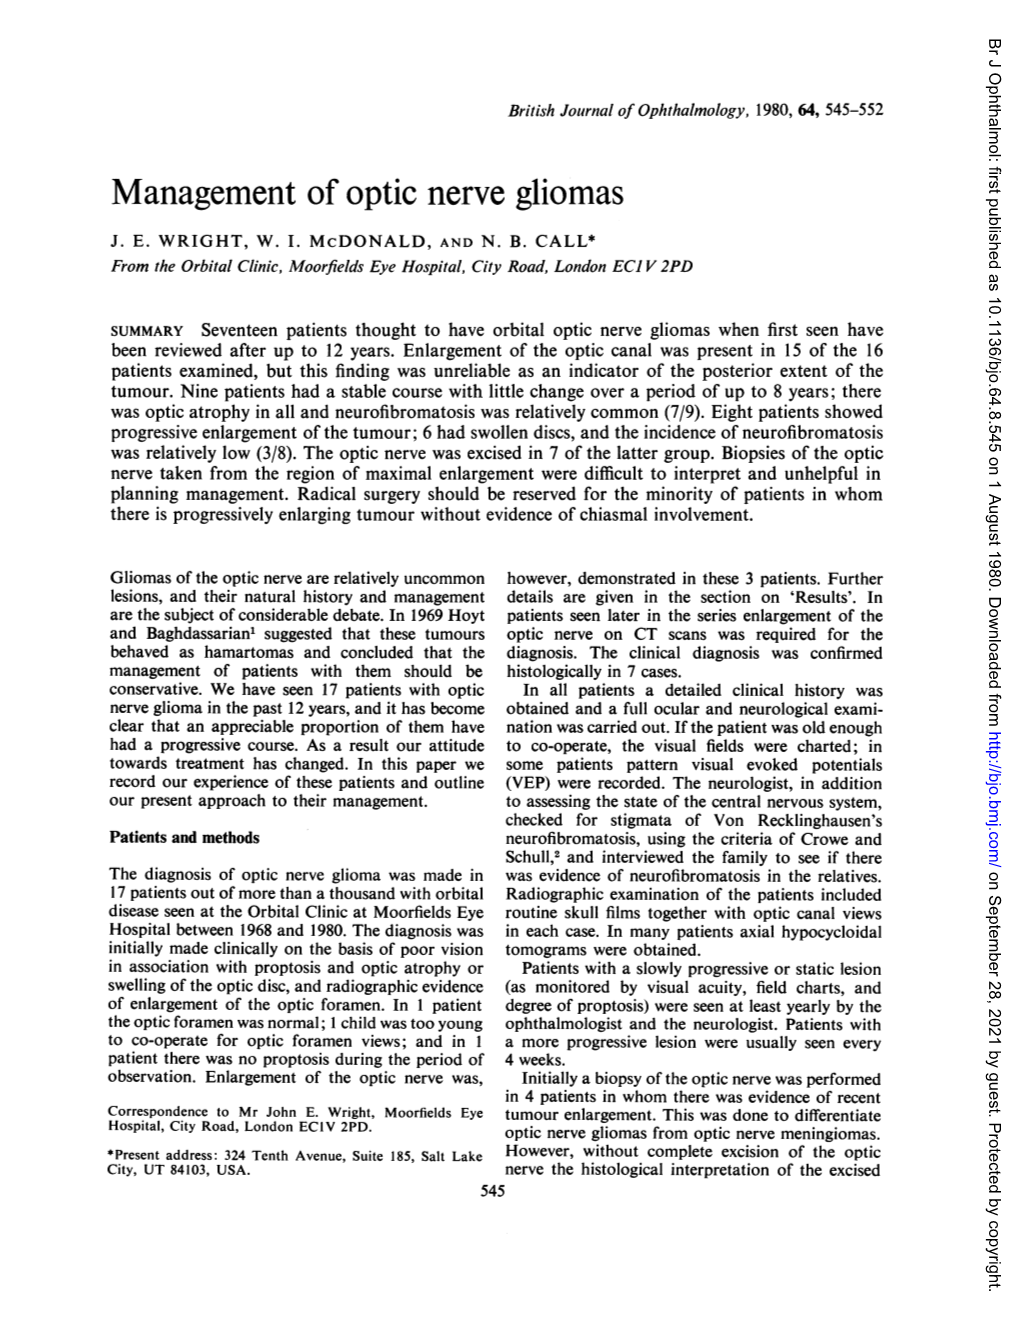 Management of Optic Nerve Gliomas